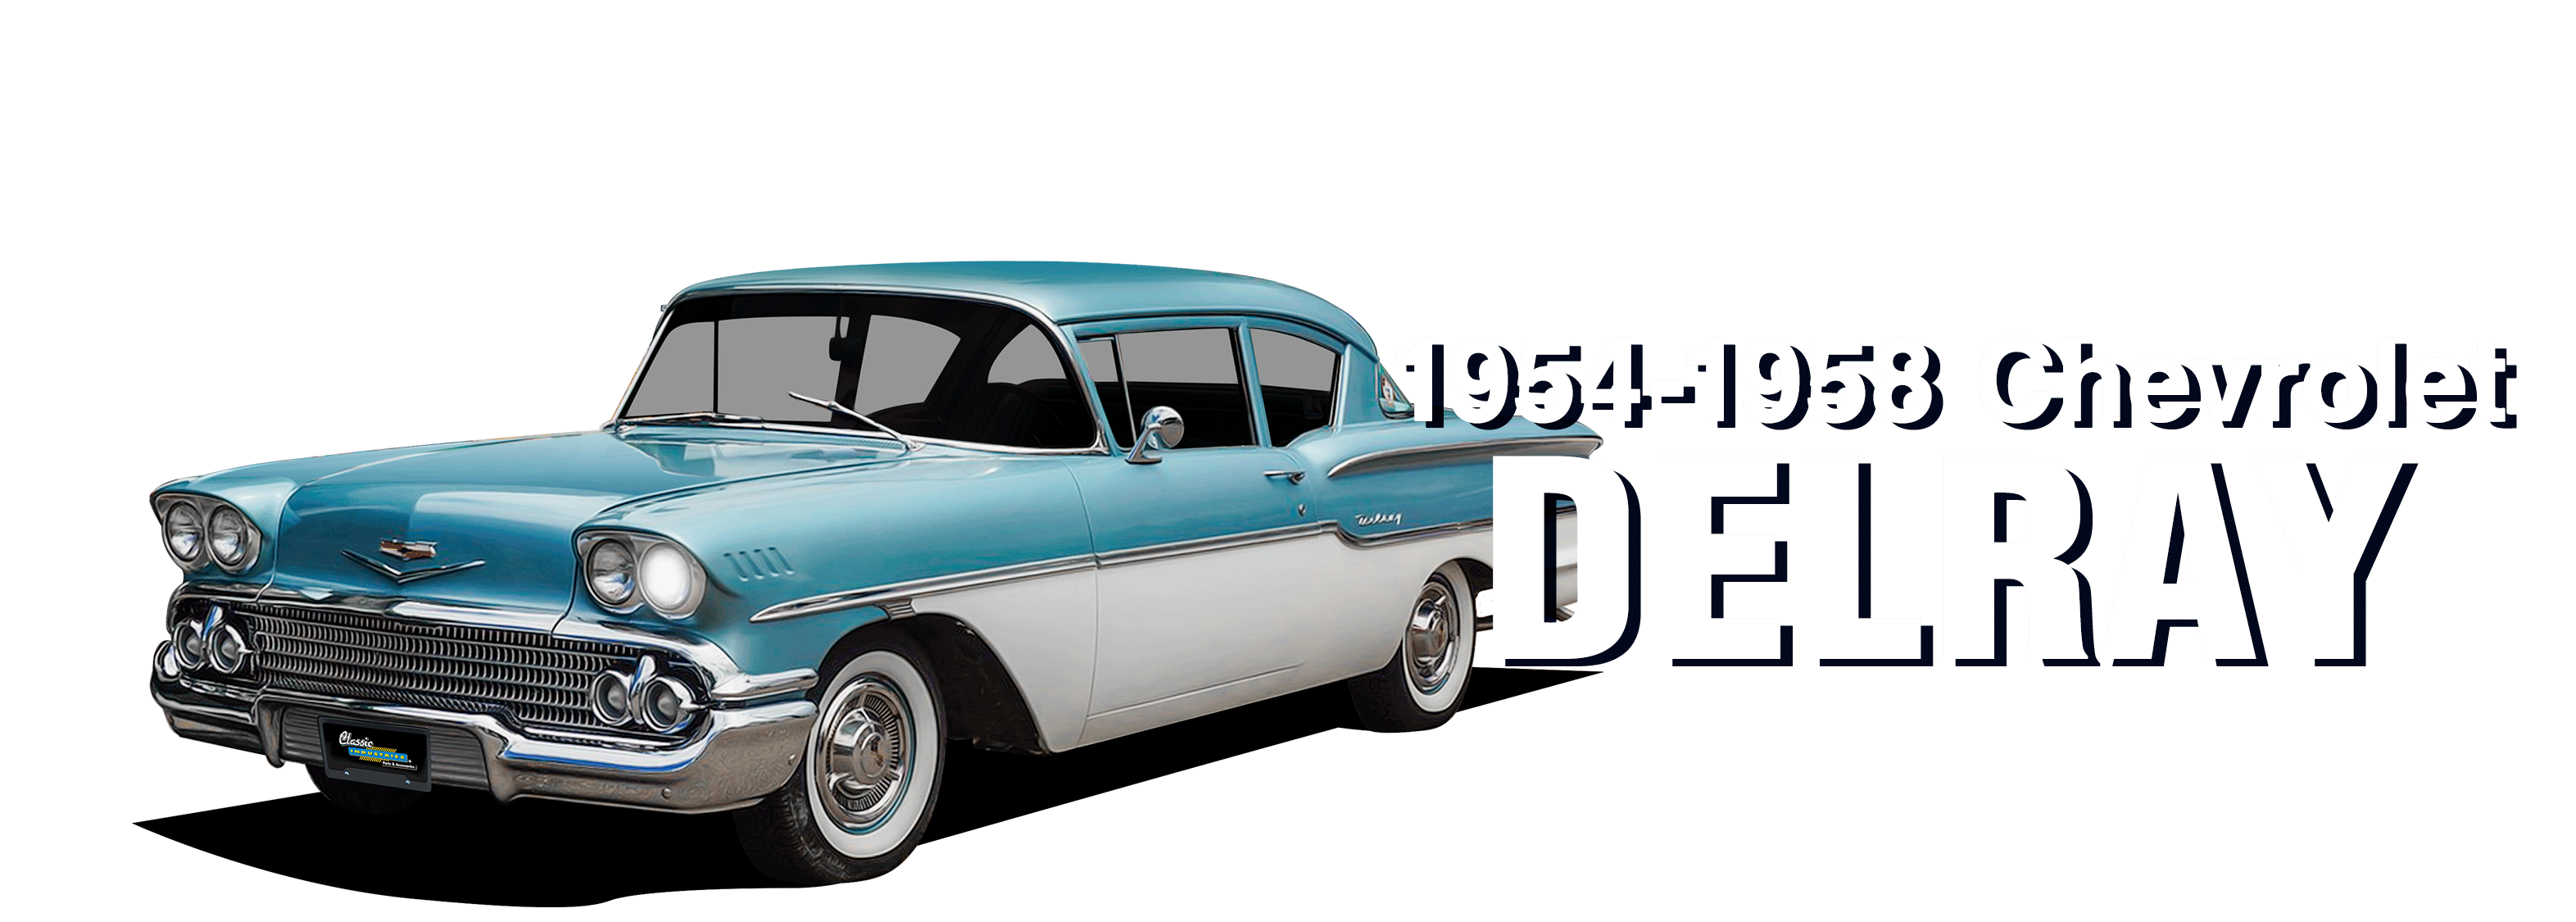 Chevy-Delray-vehicle-desktop